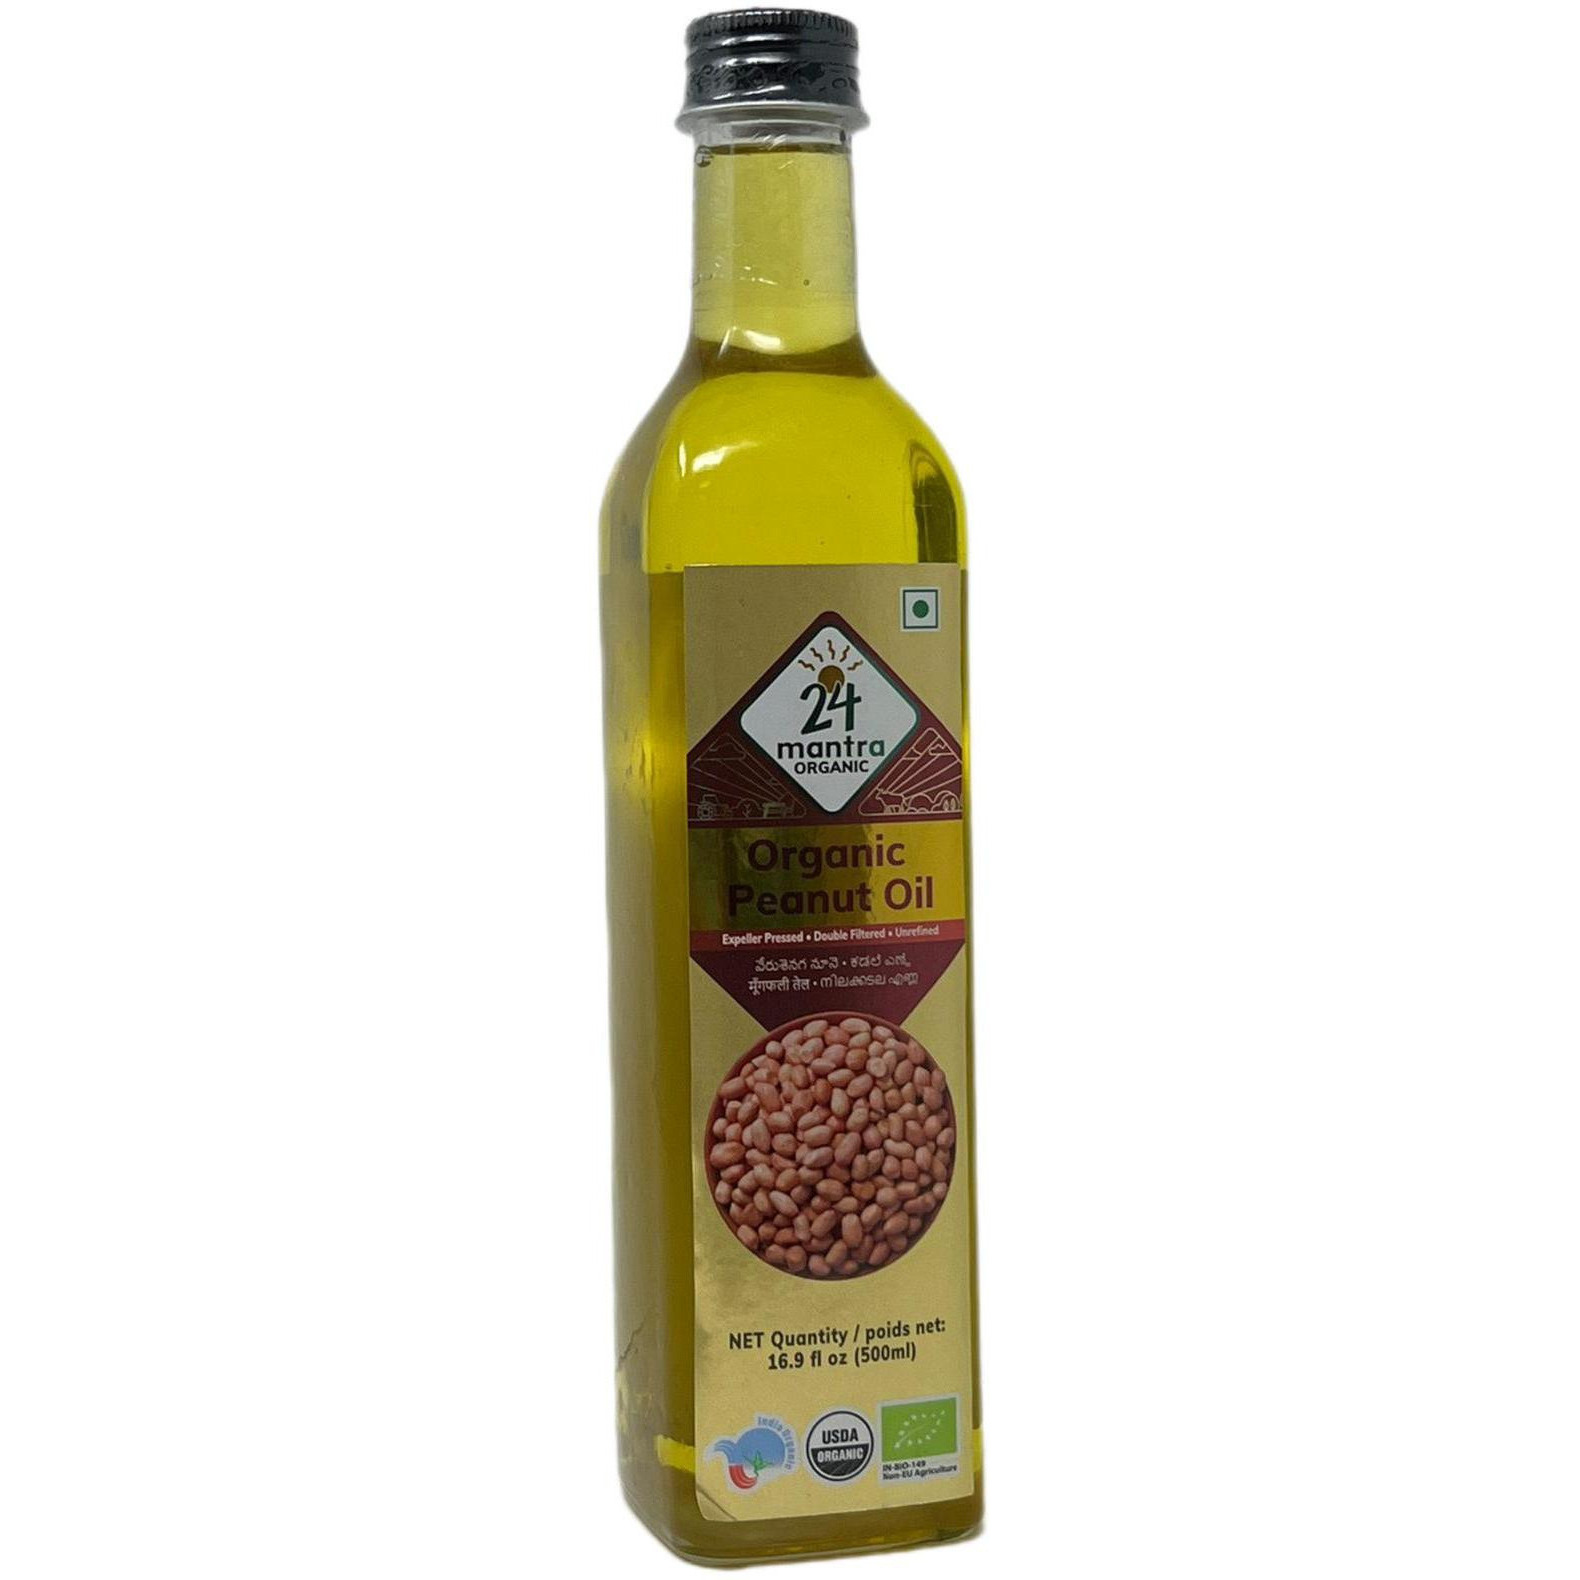 Pack of 3 - 24 Mantra Organic Peanut Oil - 500 Ml (16.9 Fl Oz)